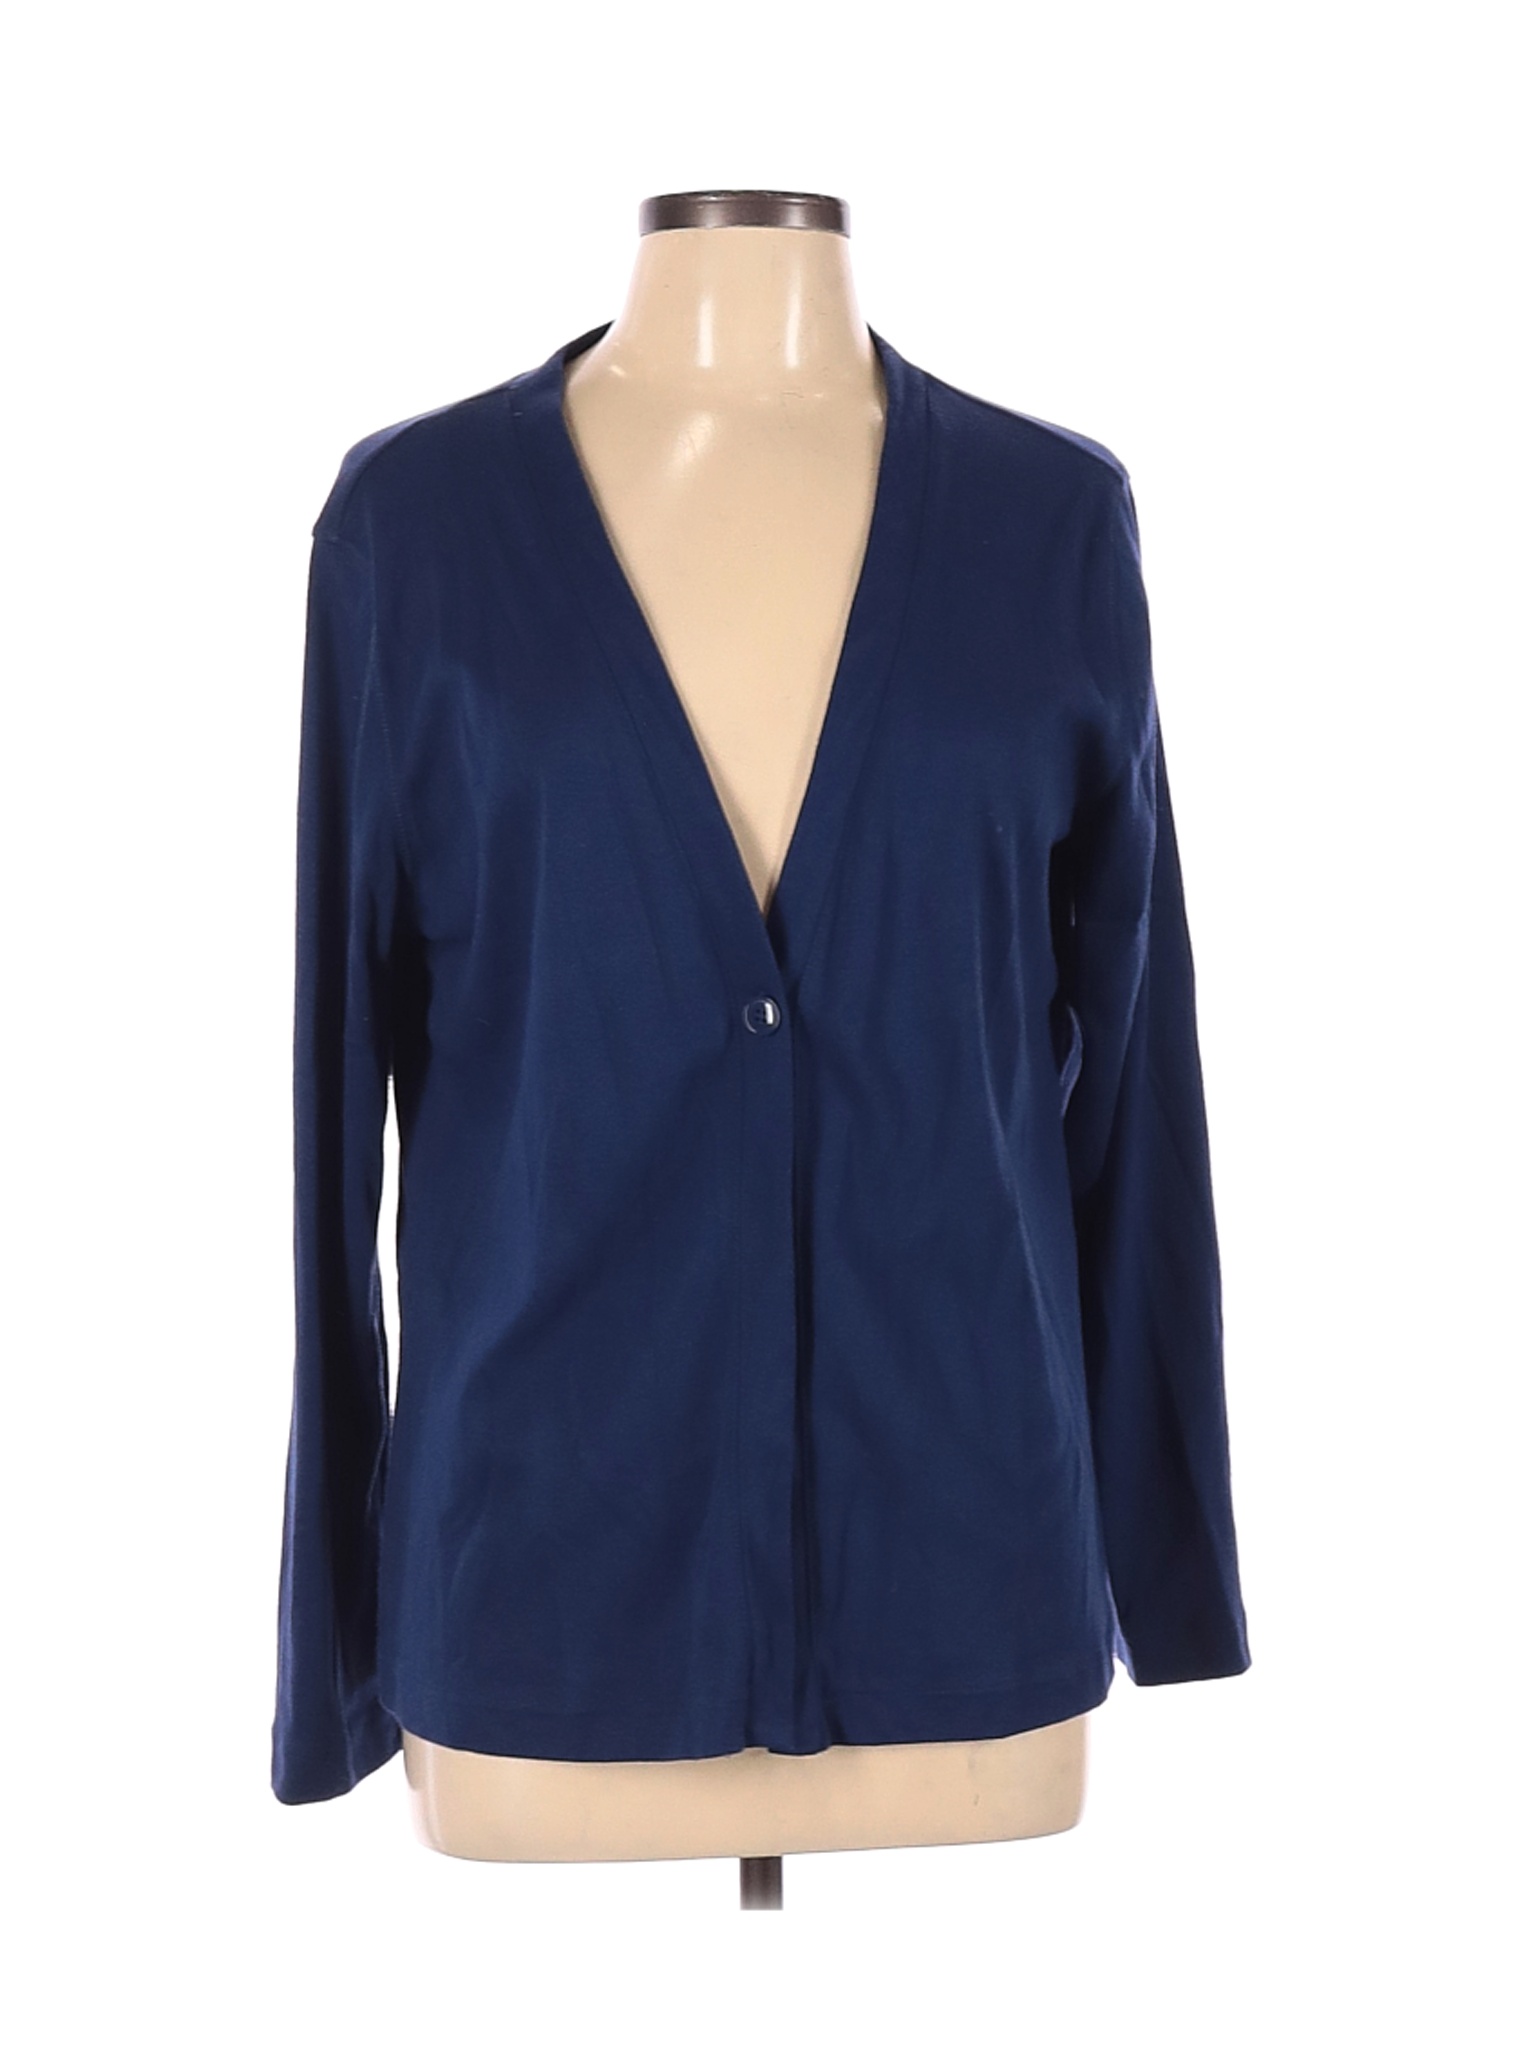 Rebecca Malone Solid Blue Cardigan Size L - 73% off | thredUP